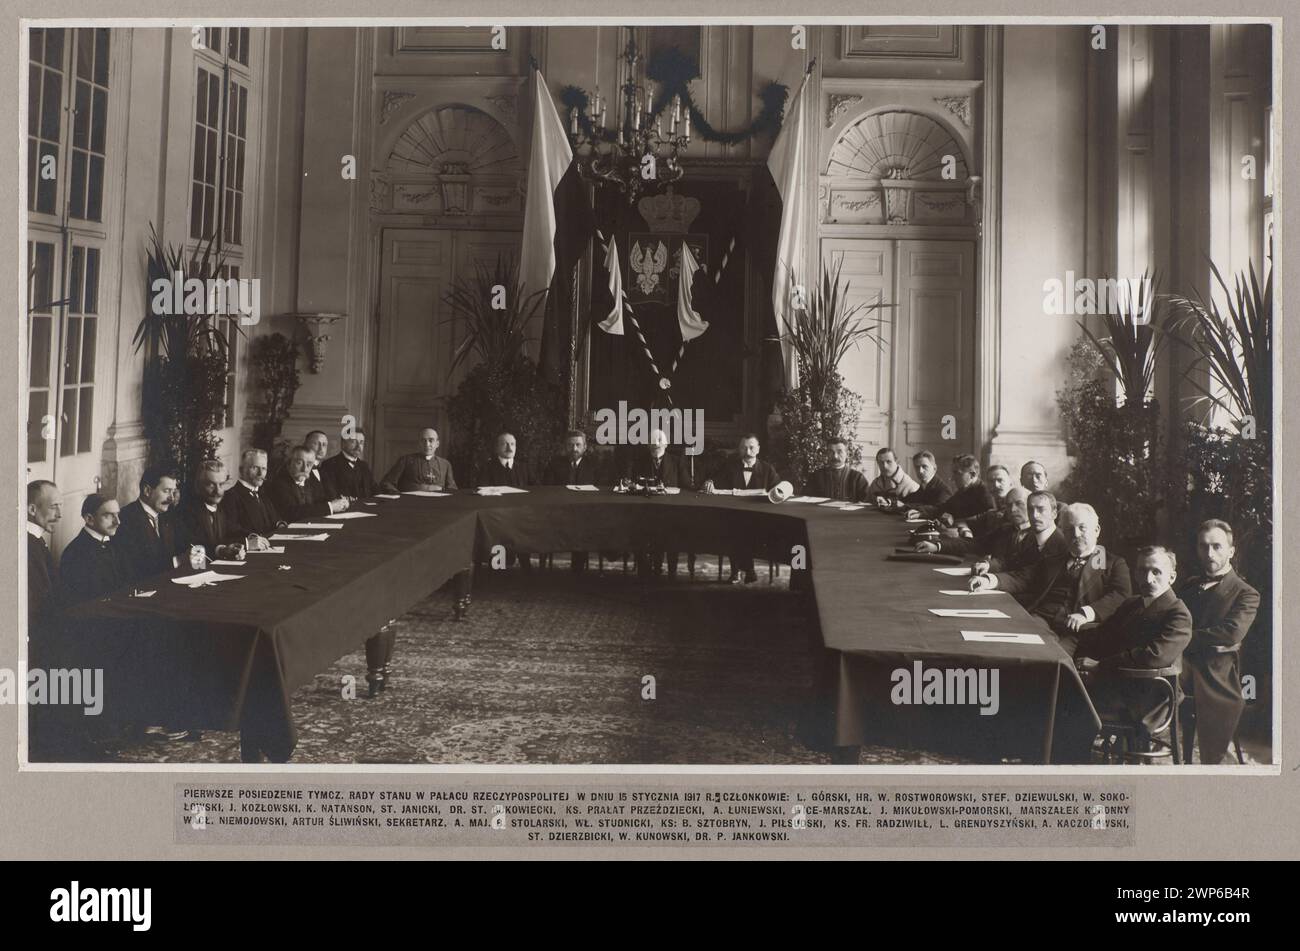 La première réunion du Conseil d'État provisoire dans les Pału de la République de Pologne le 15 janvier 1917, CZ oncles : L. Górski, HR. W. Rostworowski, Stef. Dziewulski, W. Sok Śok, J. Koz Łowski, K. Natanson Janicki, Dr. Prog Bukowiecki, père Pra IN. Studnicki, père B. Sztobryn, J. Pi Sudski, père P. Radziwi, L. Grendyszy, A. Kaczorowski Dzierzbicki, W. Kunowski, dr P. Jankowski [album 'Réunion du Conseil d'Etat provisoire du 15 janvier 1917'] ; Saryusz-Wolski, WAC AW (1870-1933) ; 15.01.1917 (1917-00-00-1917-00-00) ; Conseil d'Etat temporaire du Royaume de Pologne ( Banque D'Images